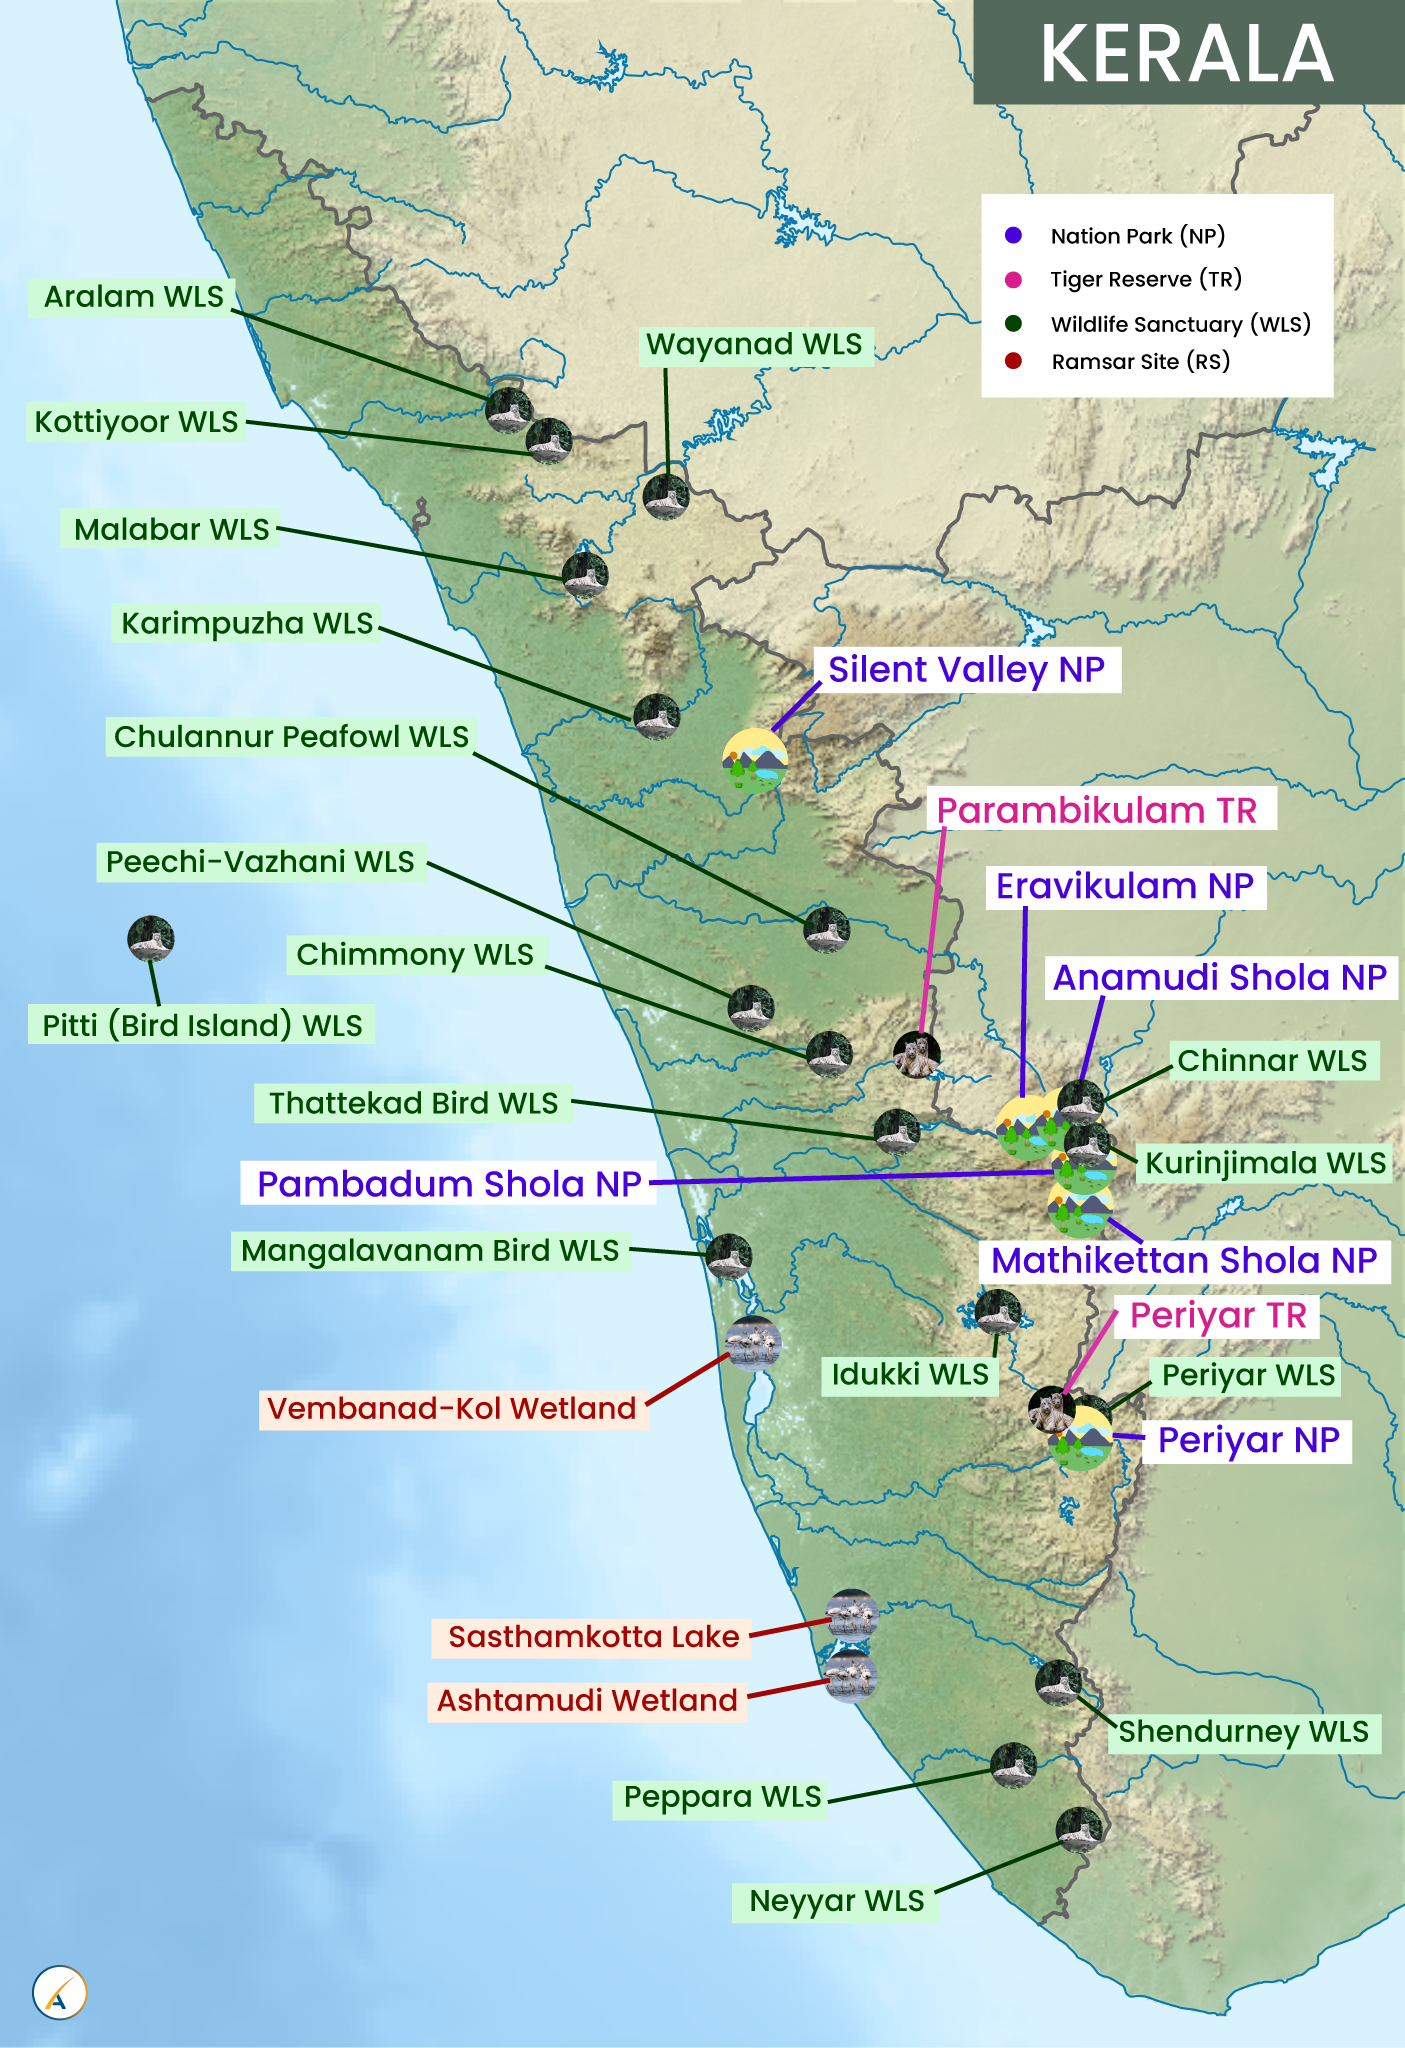 Kerala National Parks, Tiger Reserves, Wildlife Sanctuaries & Ramsar Sites Map